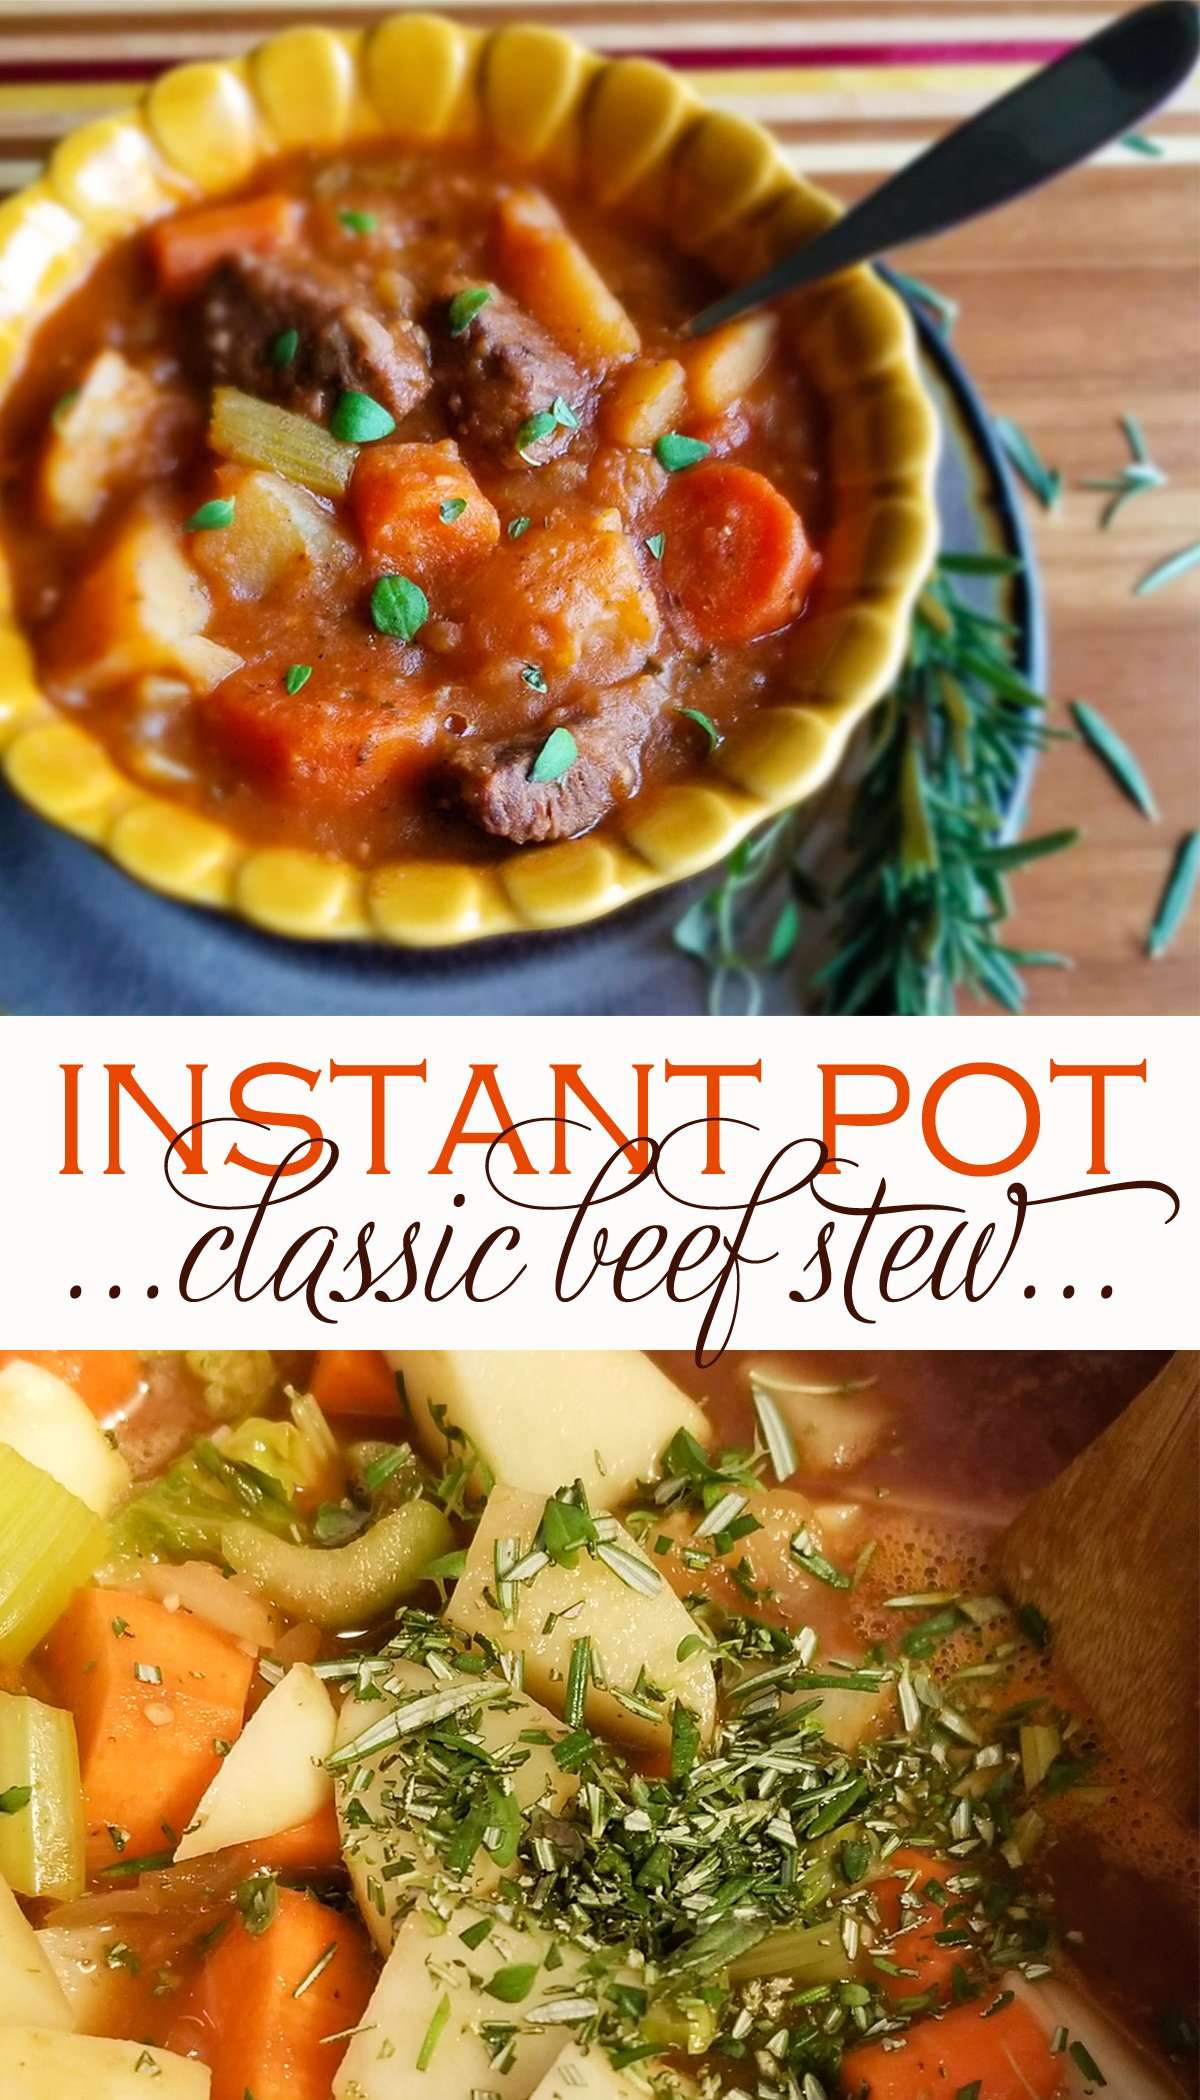 Instant Pot Classic Beef Stew